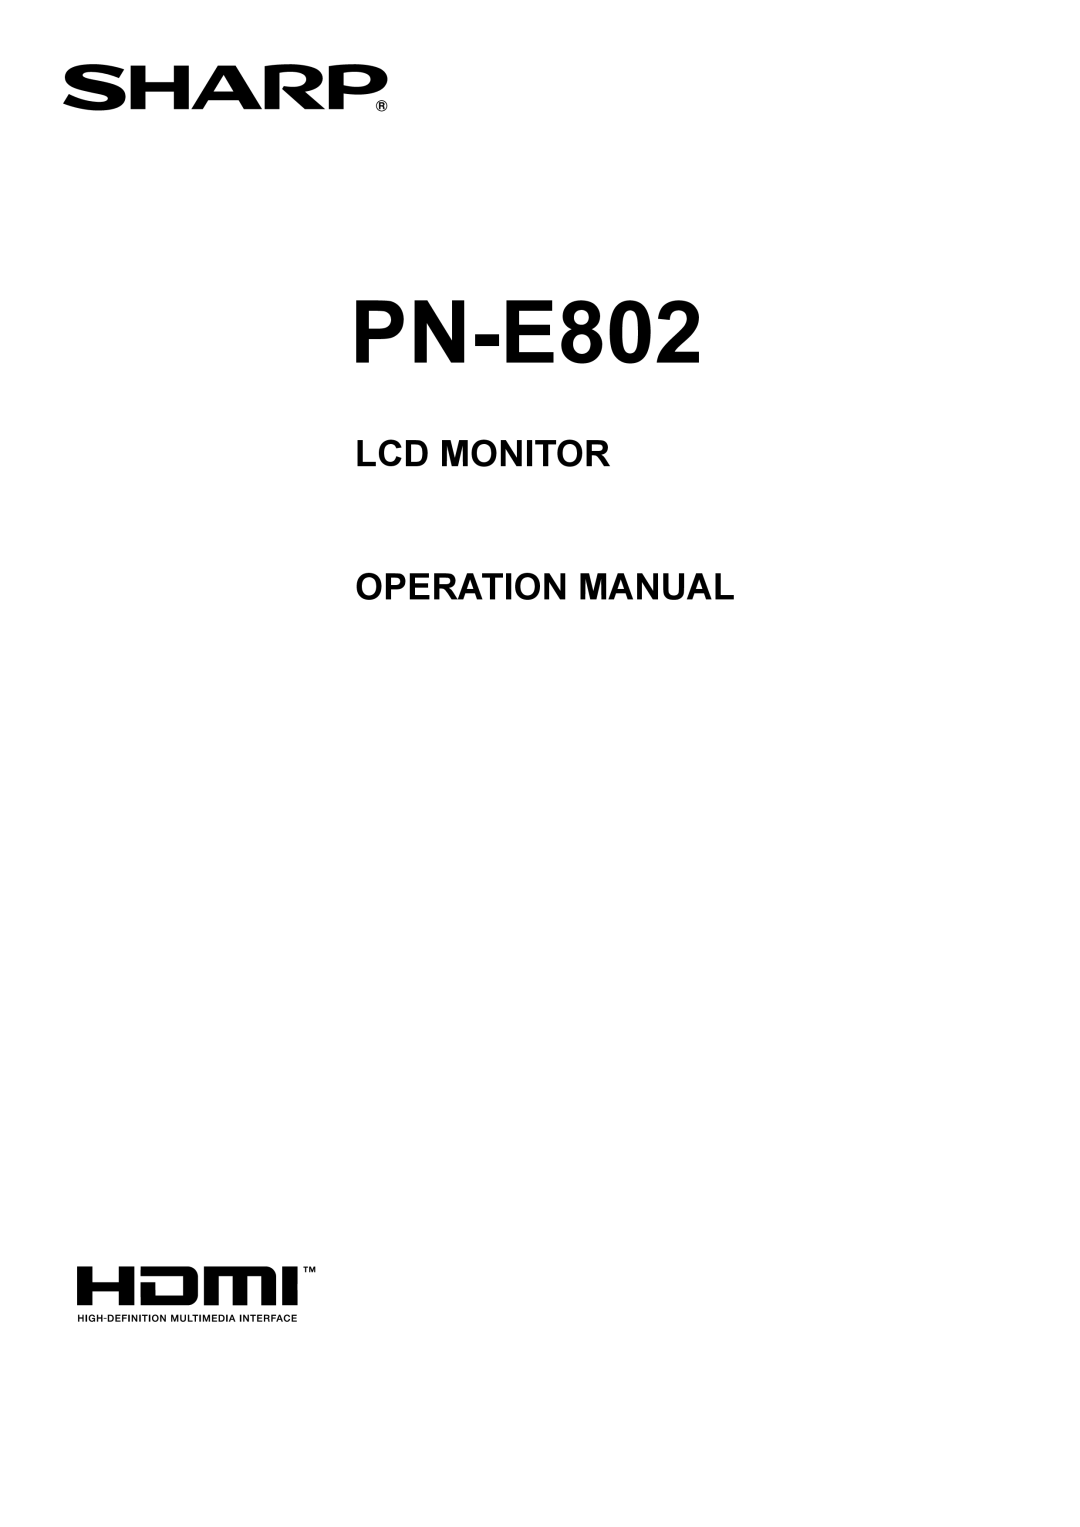 Sharp PNE802 operation manual PN-E802, Lcd Monitor Operation Manual 